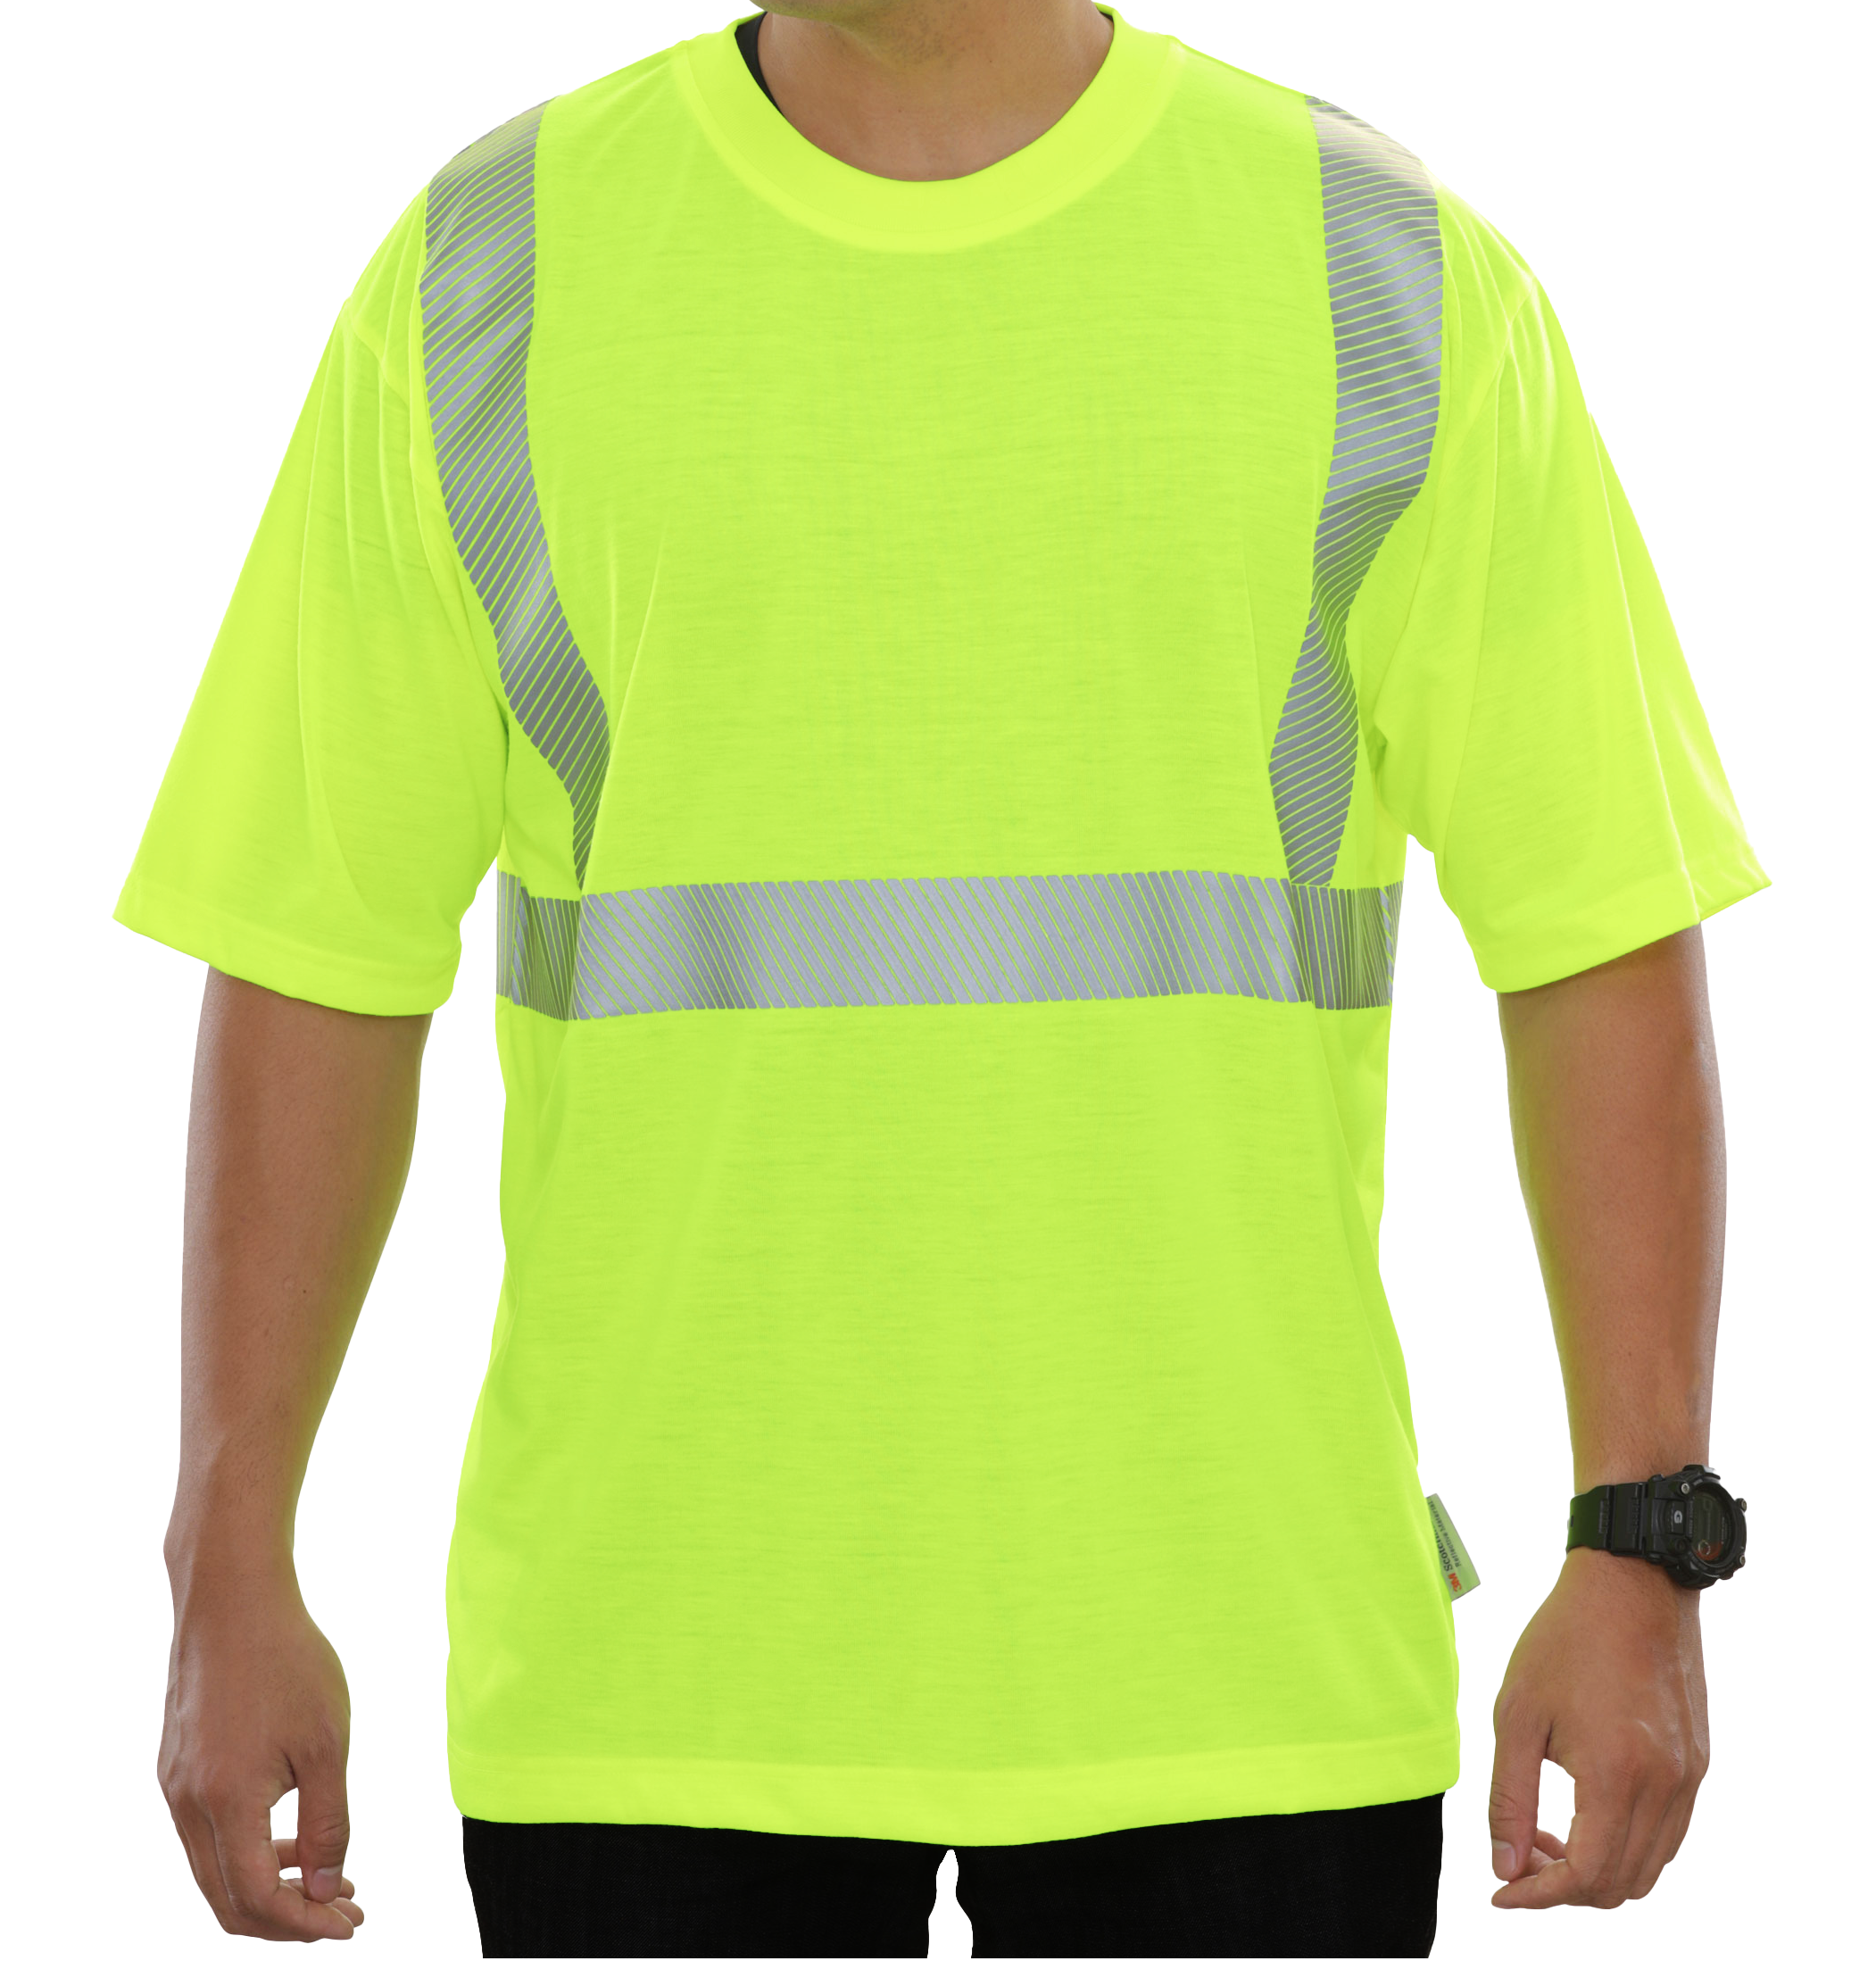 101CTLM Hi-Vis Lime Safety T-Shirt: 3M 2x / Standard Non-X Back